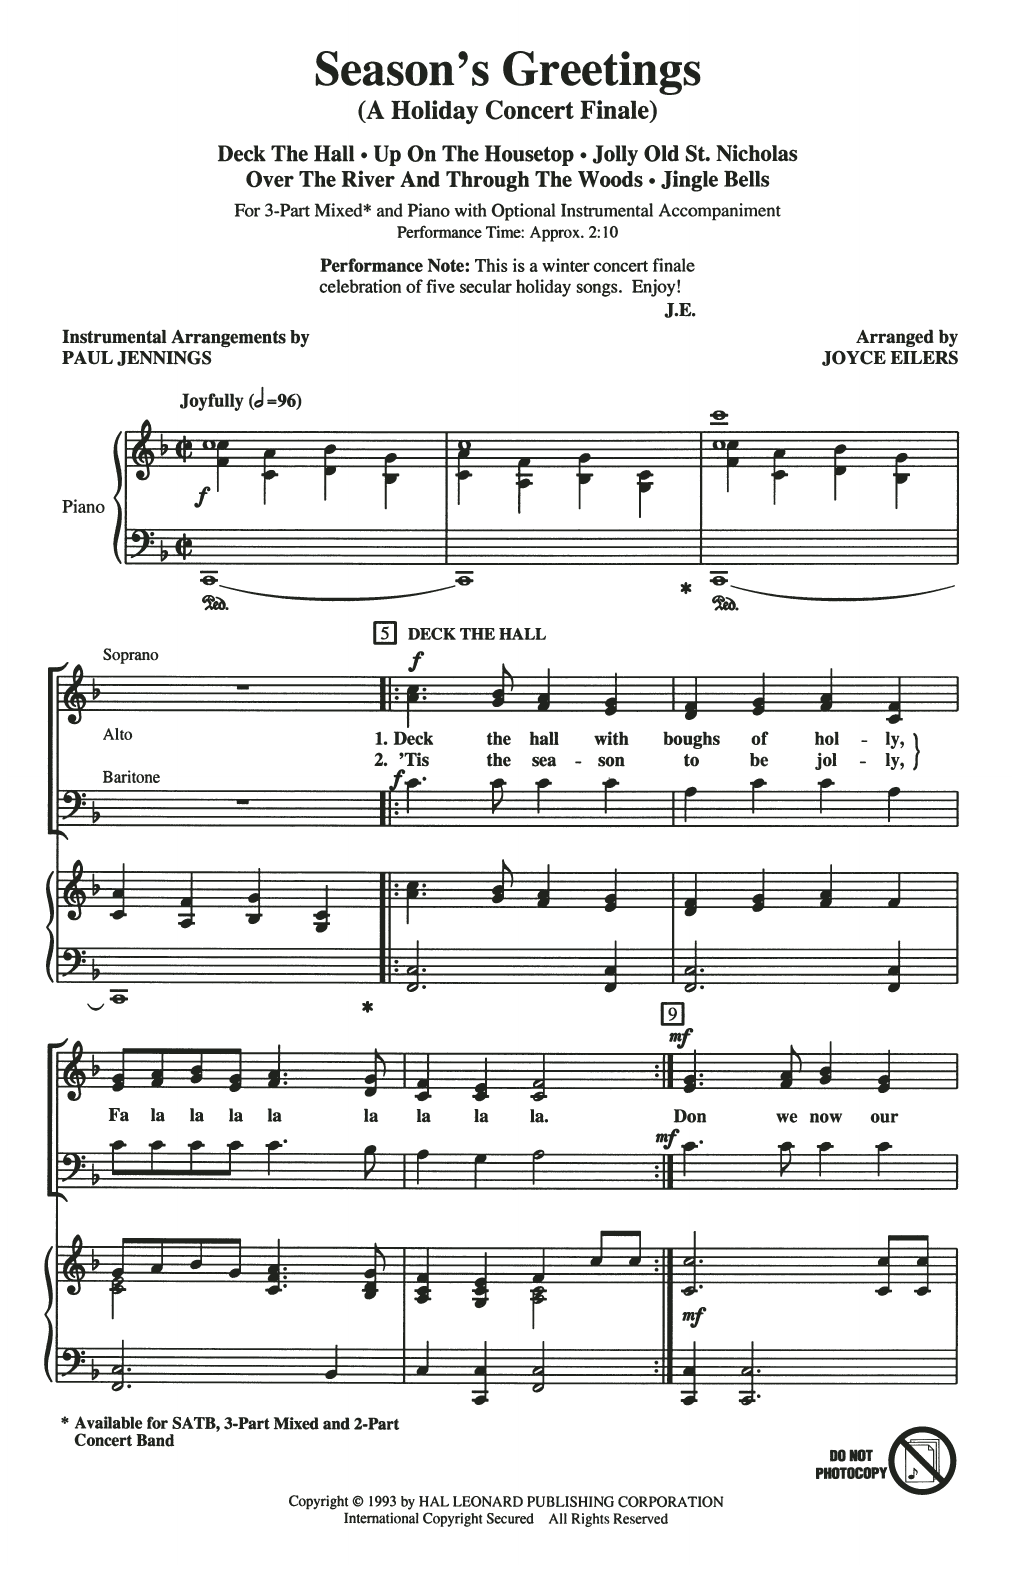 Joyce Eilers Season's Greetings (Medley) Sheet Music Notes & Chords for 3-Part Mixed Choir - Download or Print PDF